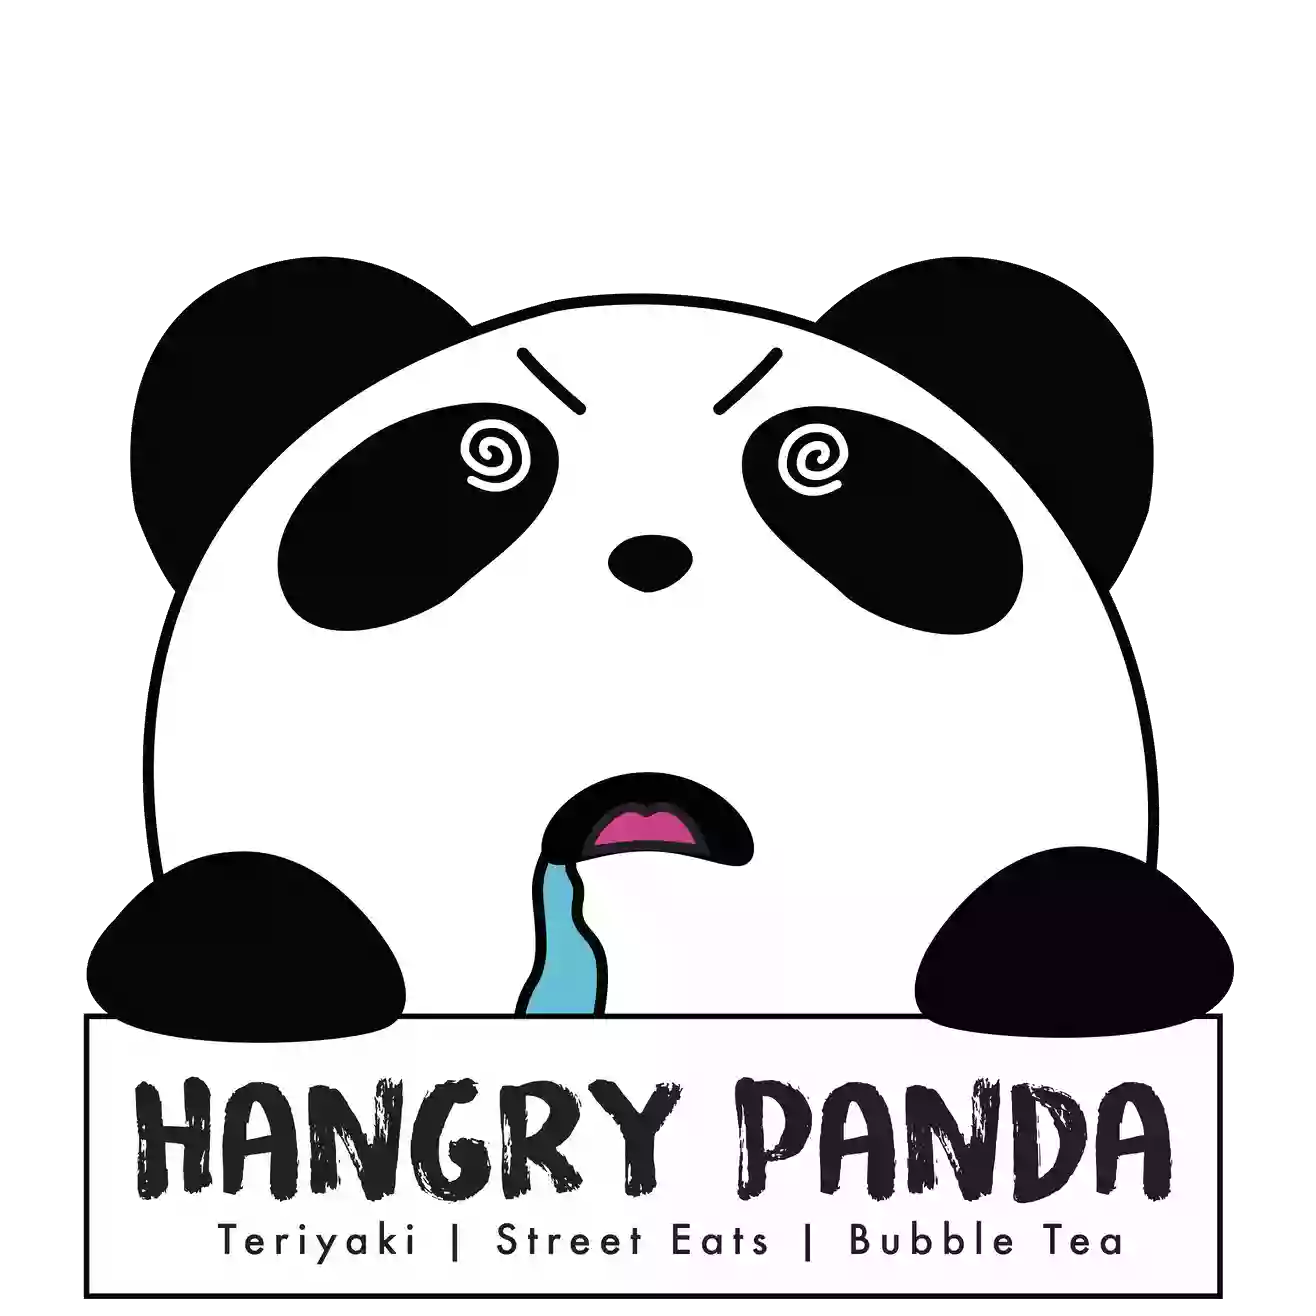 Hangry Panda: Gluten Free Fried Chicken, Teriyaki & Bubble Tea